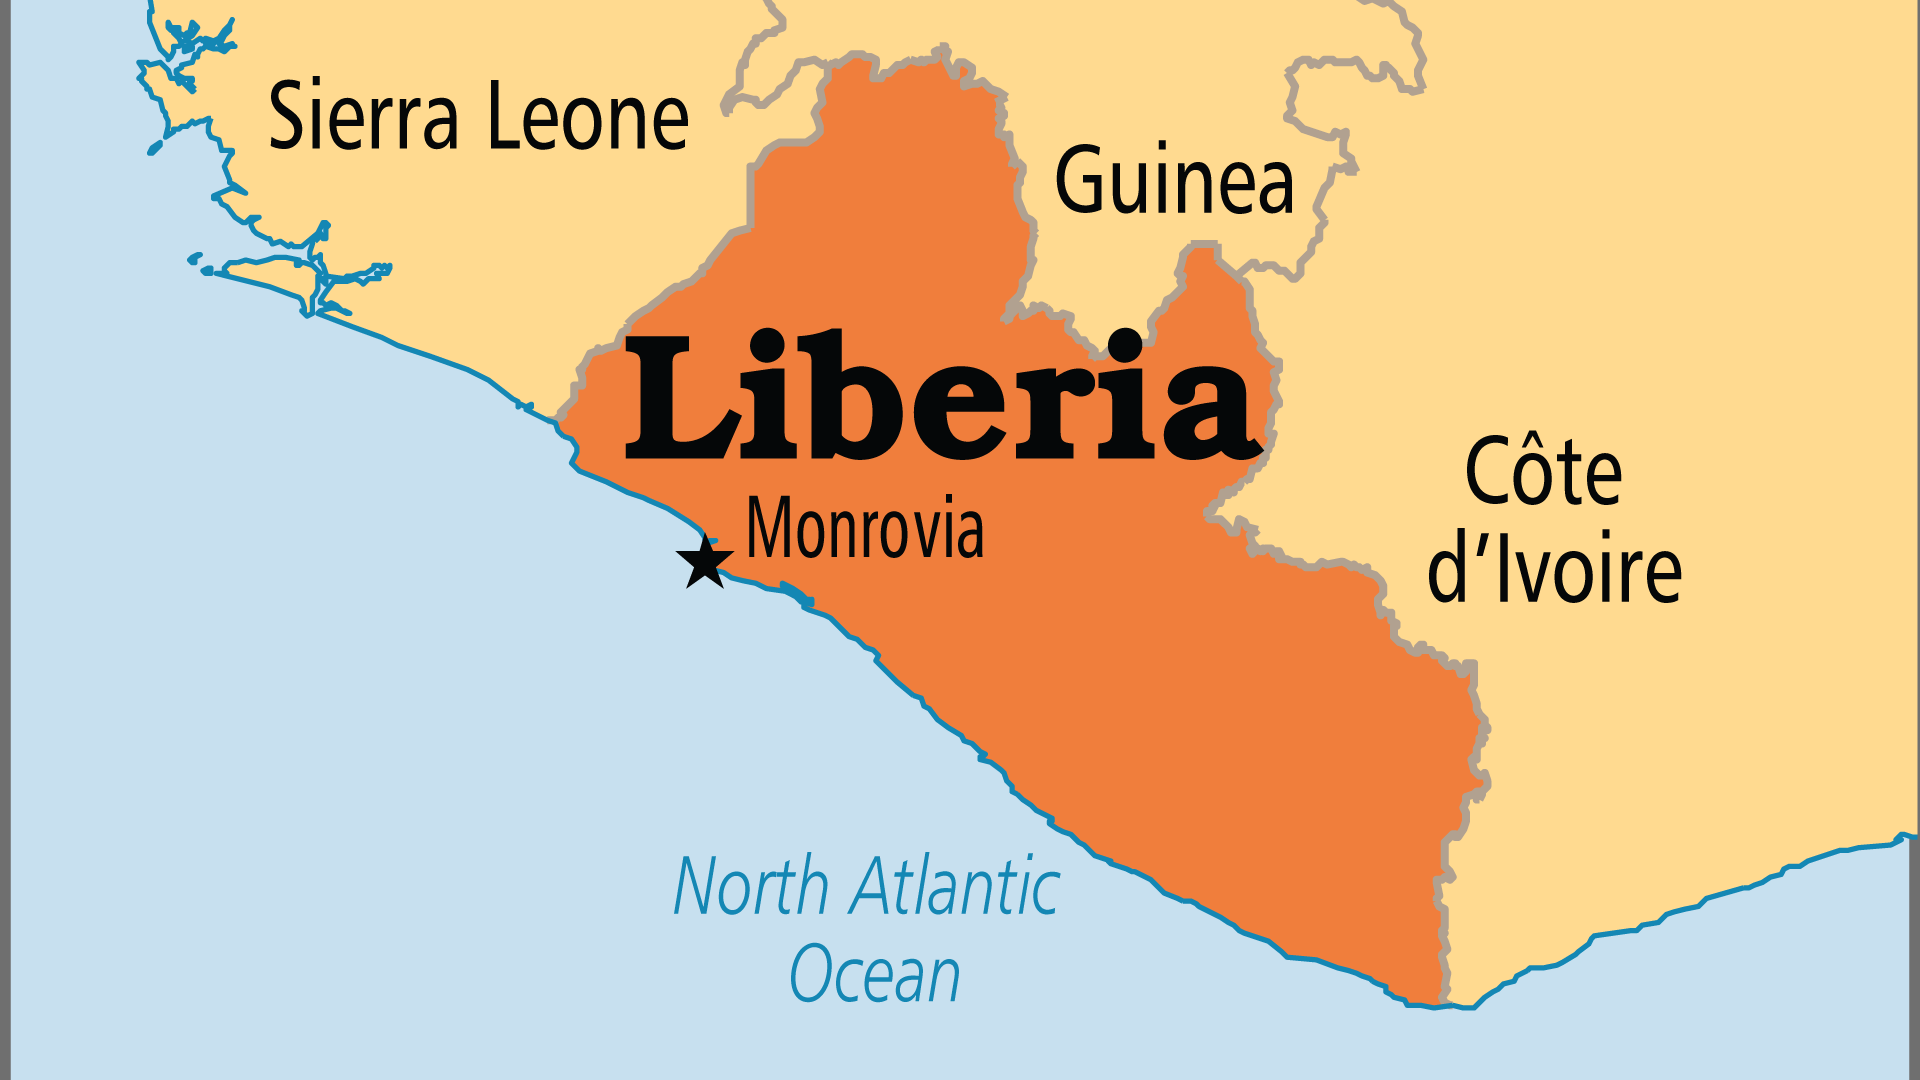 Liberia (Operation World)